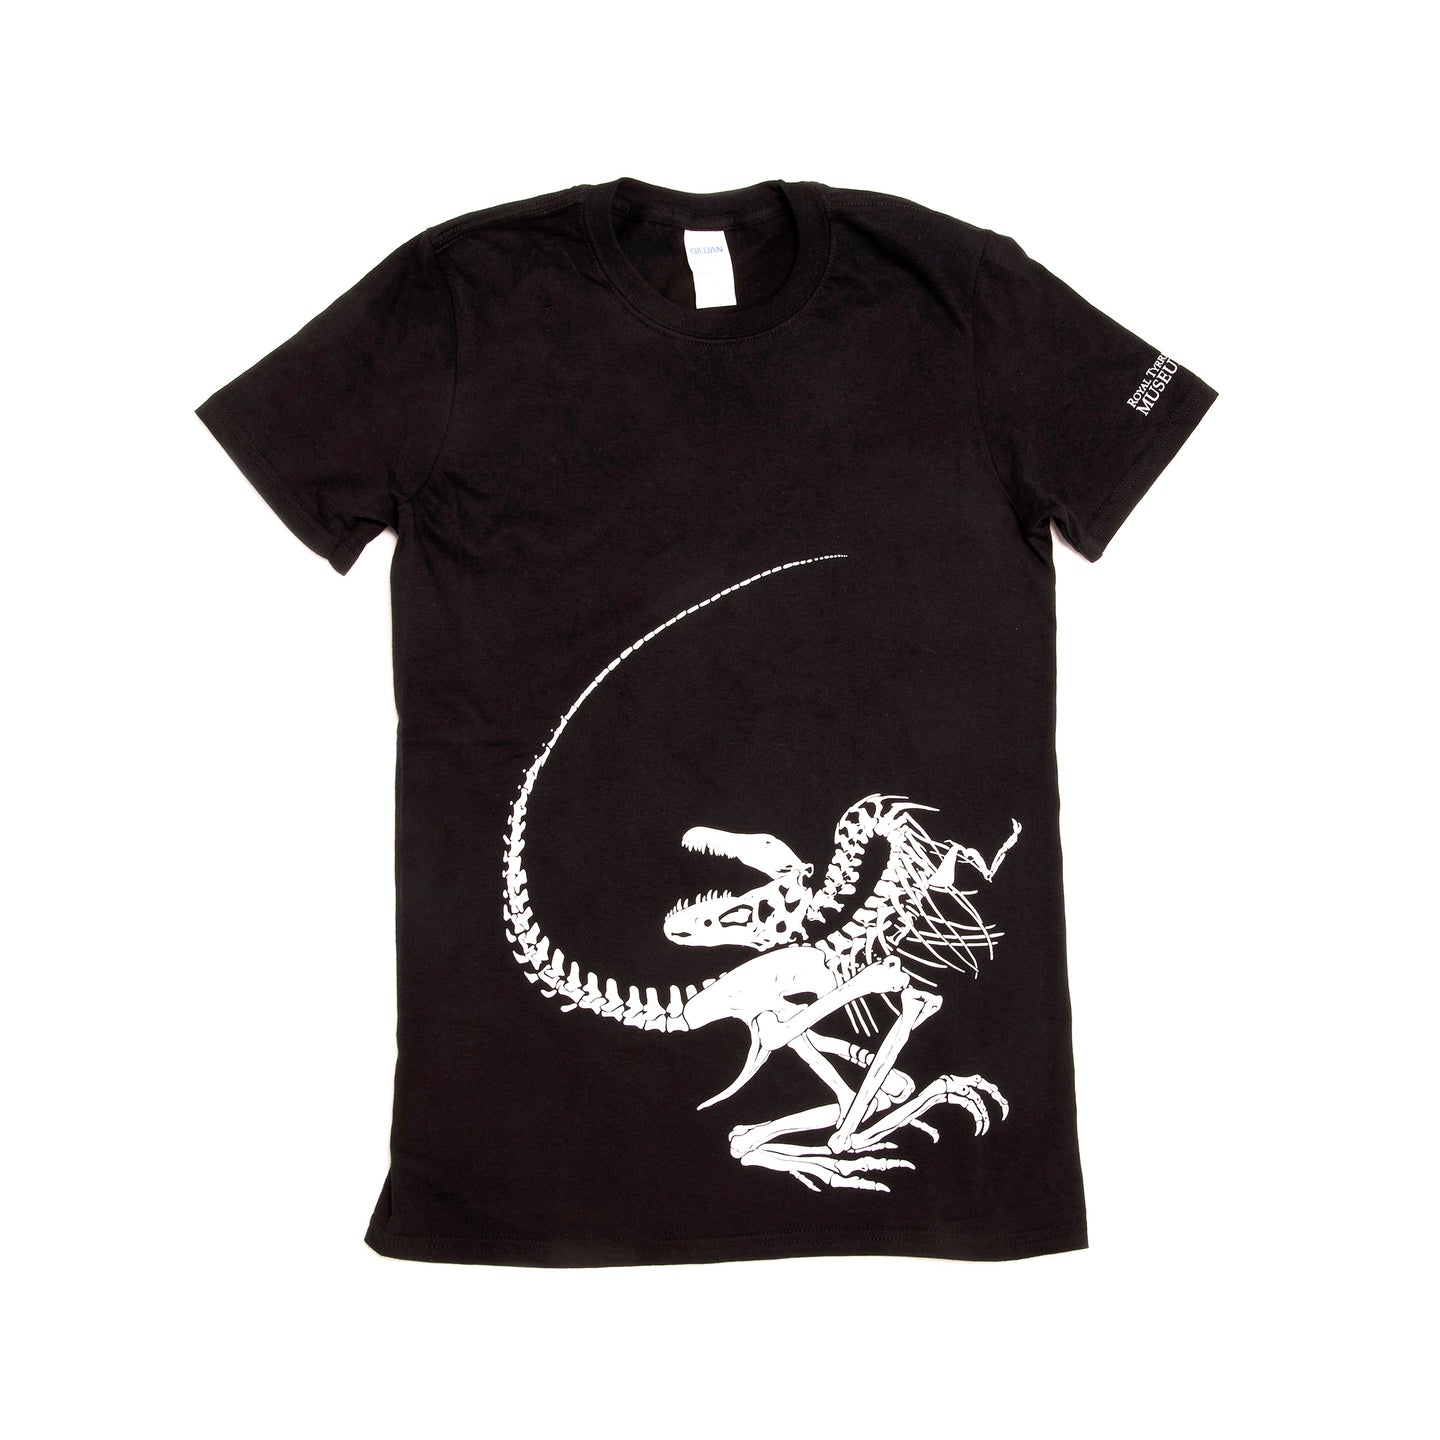 Gorgosaurus Death Pose Youth T-shirt